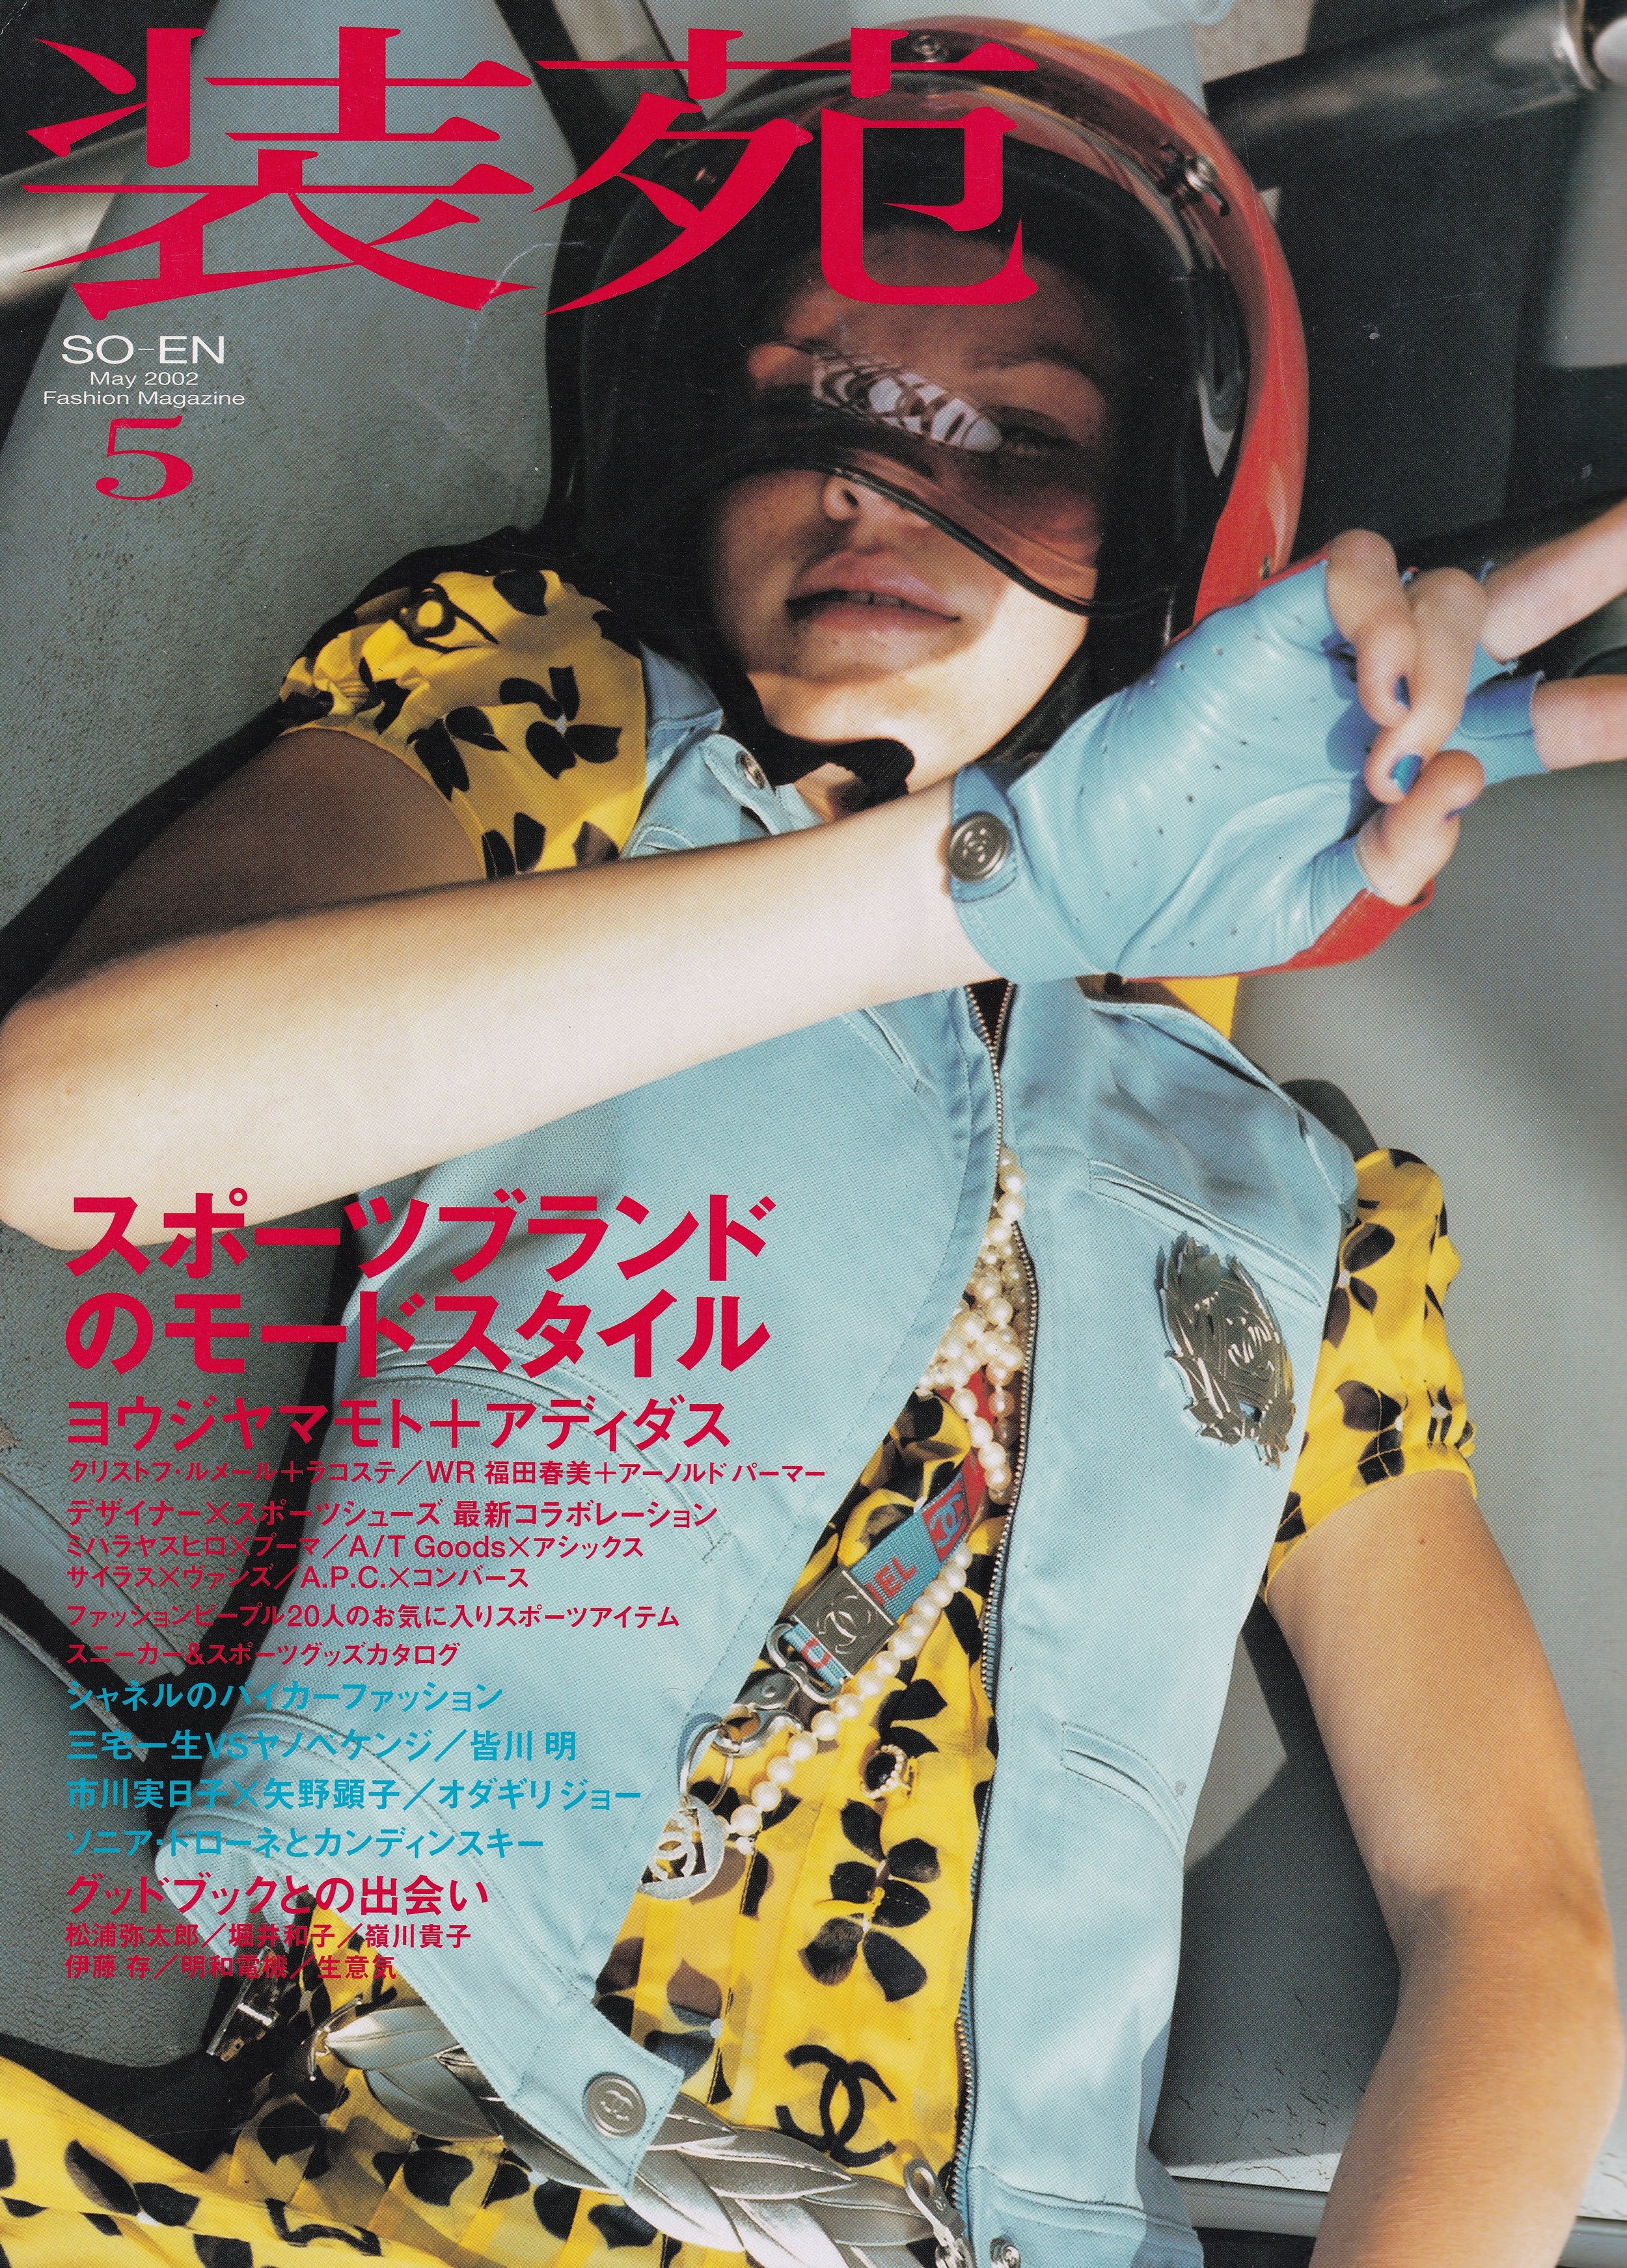 SO-EN Magazine (may 2002) - Chanel — archaism studio